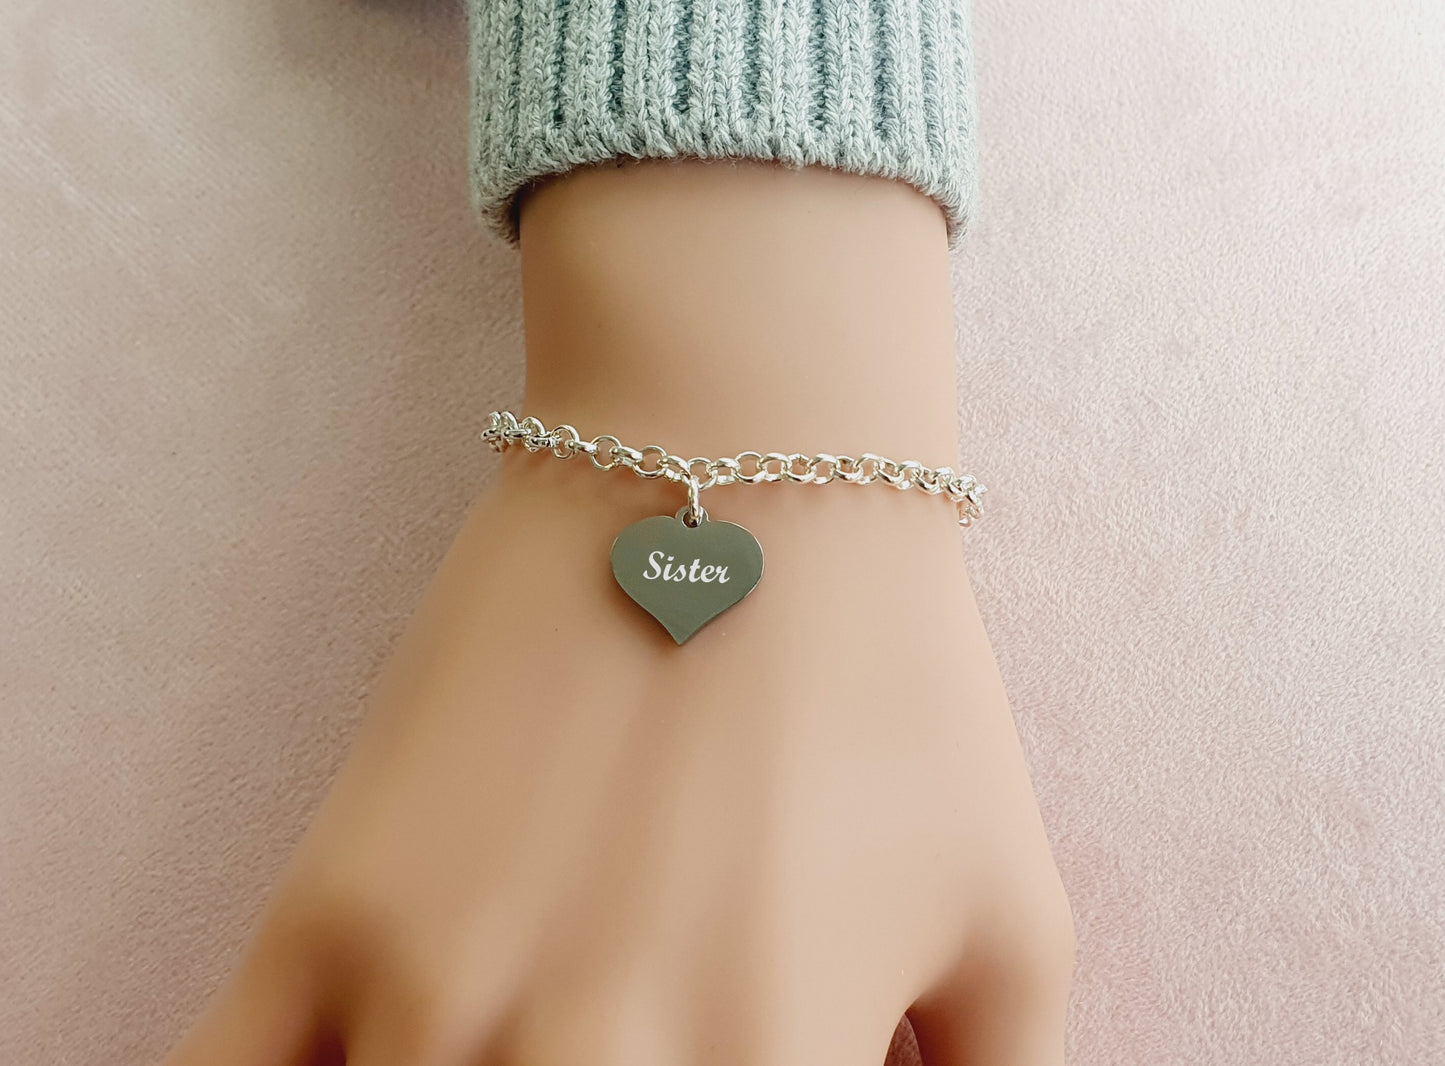 Sister Engraved Heart Charm Link Bracelet. Personalised Bracelet, Message Jewellery